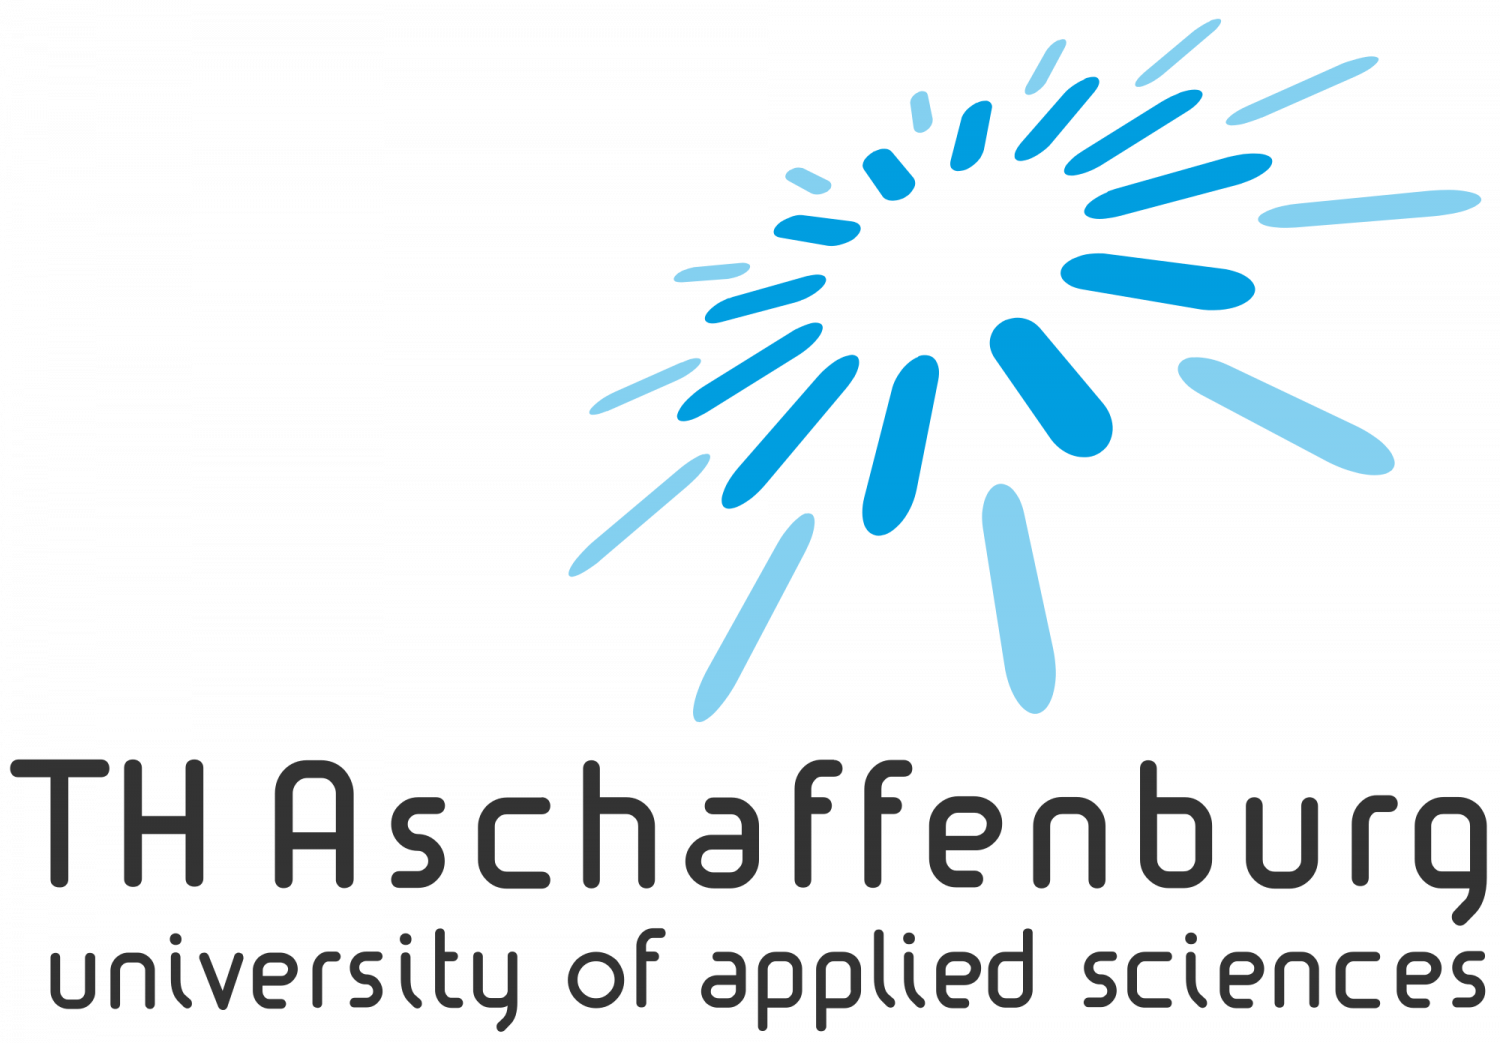 TH Aschaffenburg Logo